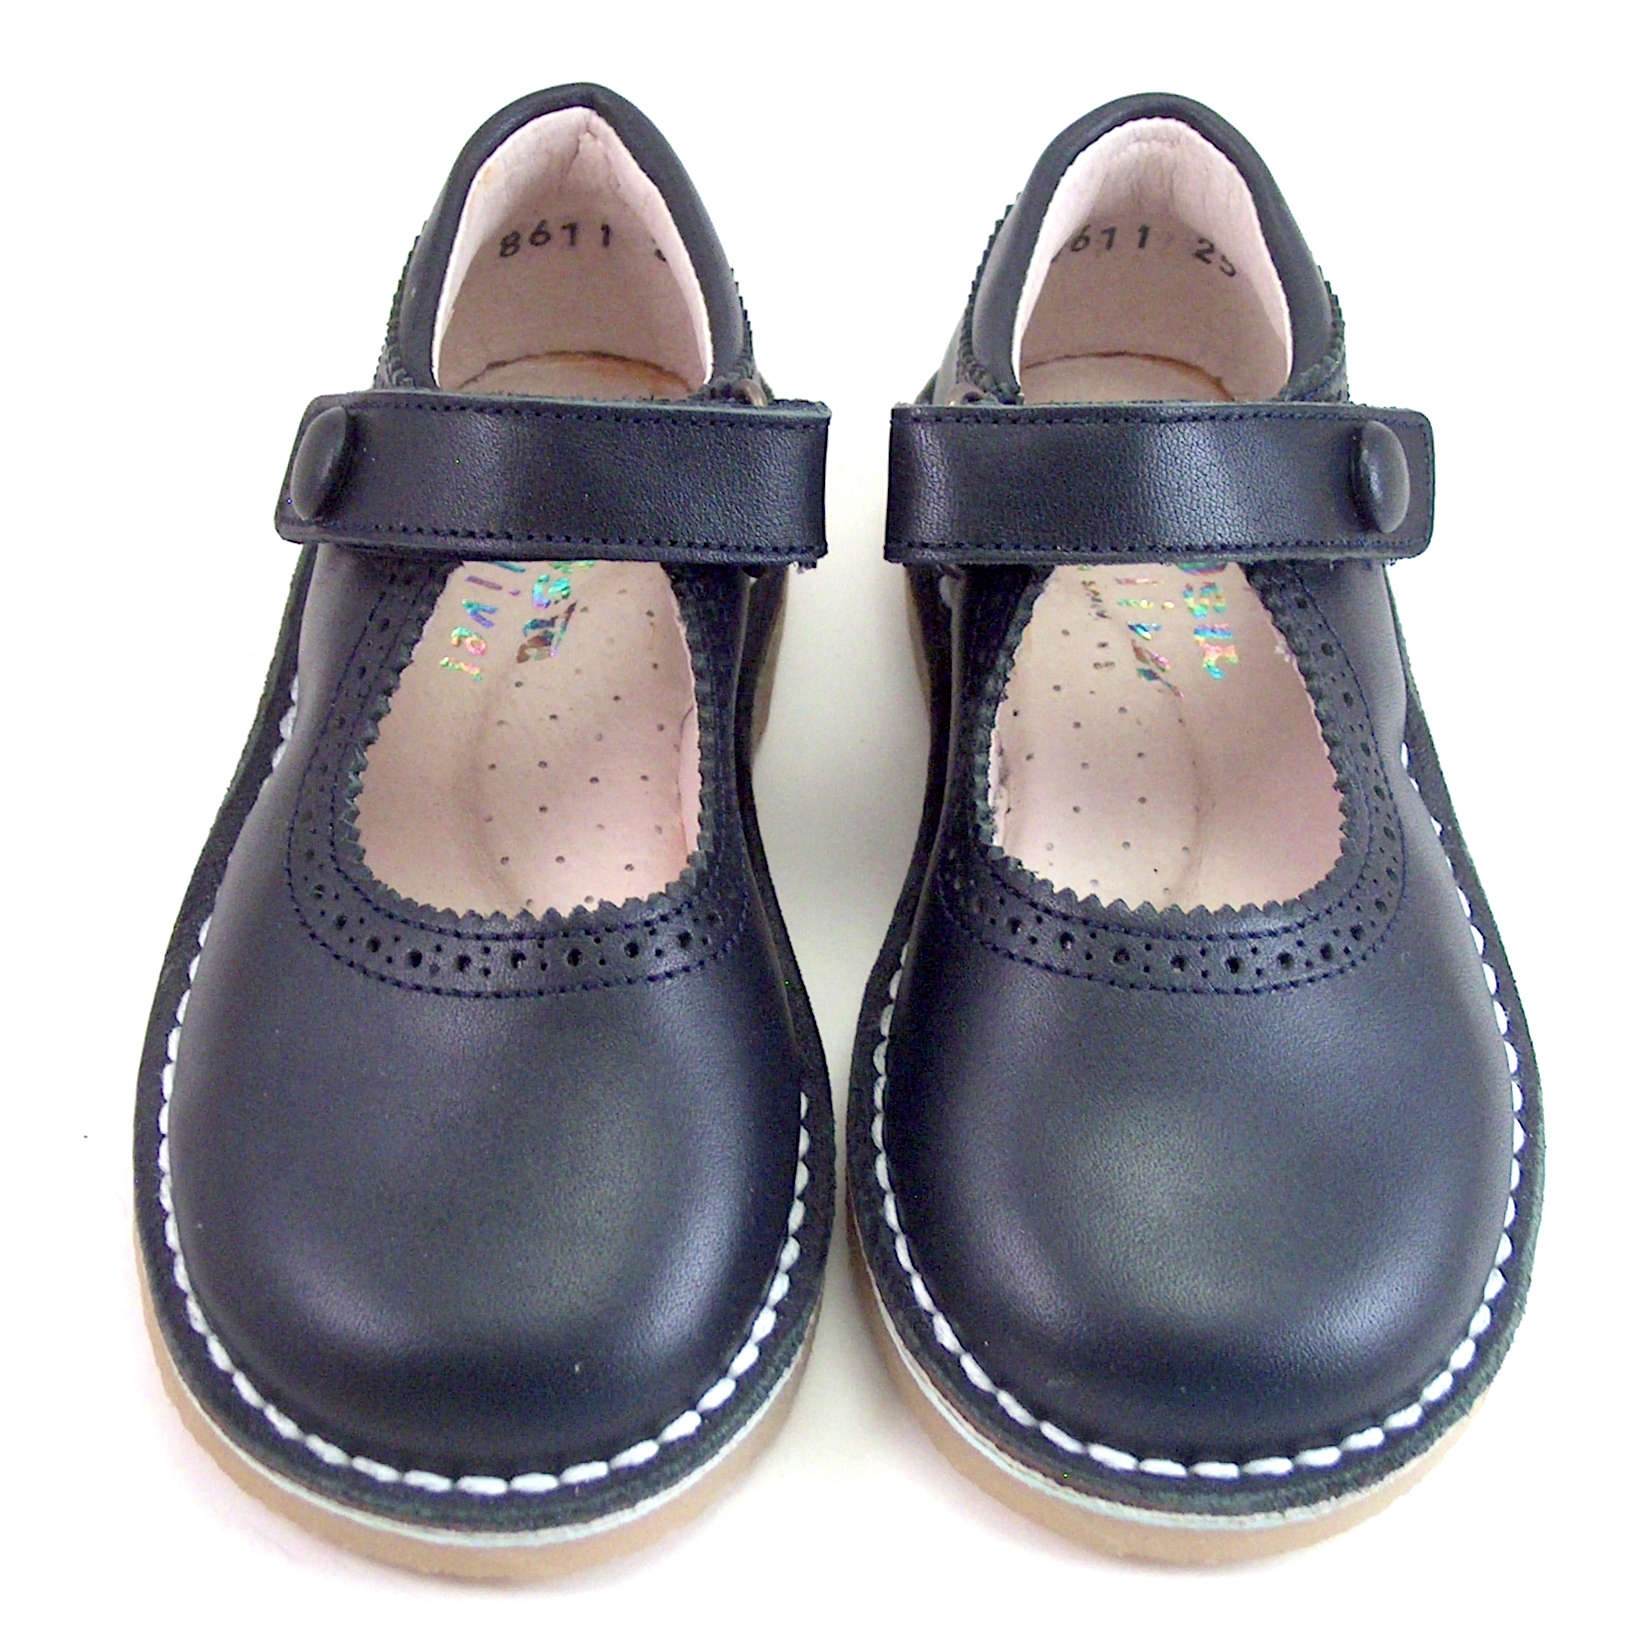 5Z8611 - Navy Blue School Shoes - Euro 24 Size 7